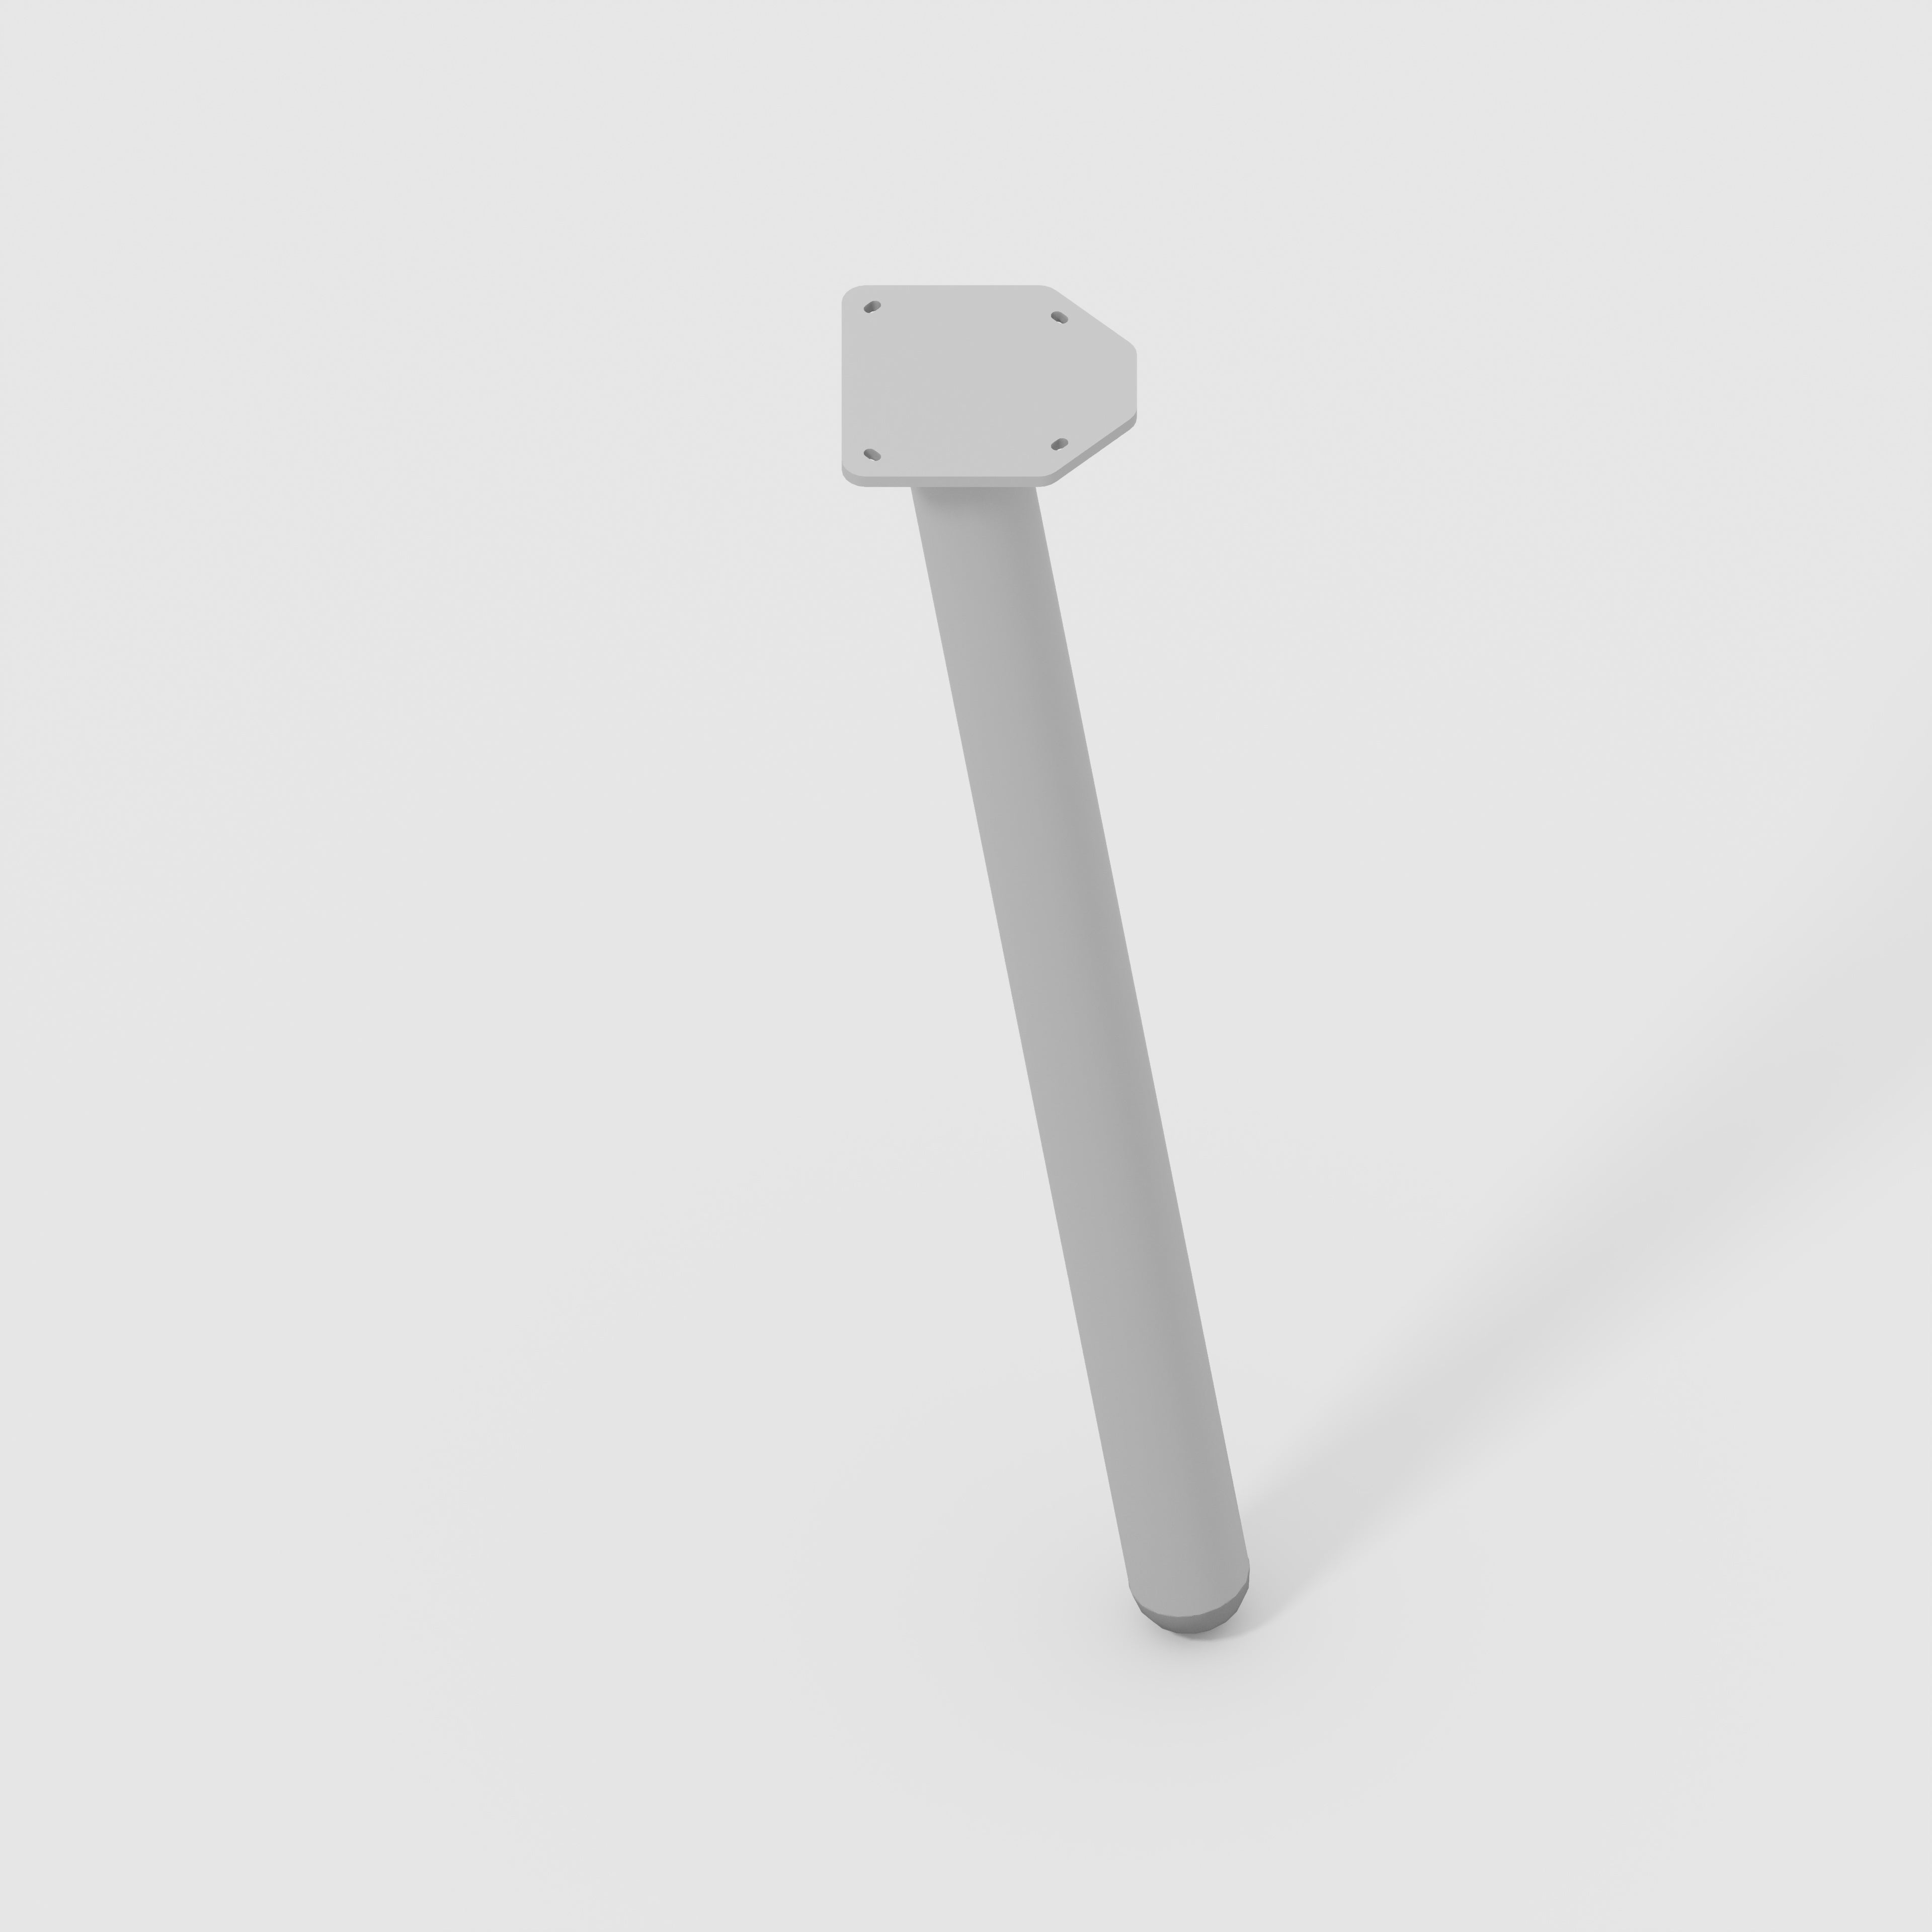 Desk/Table Legs - Round Single Pin